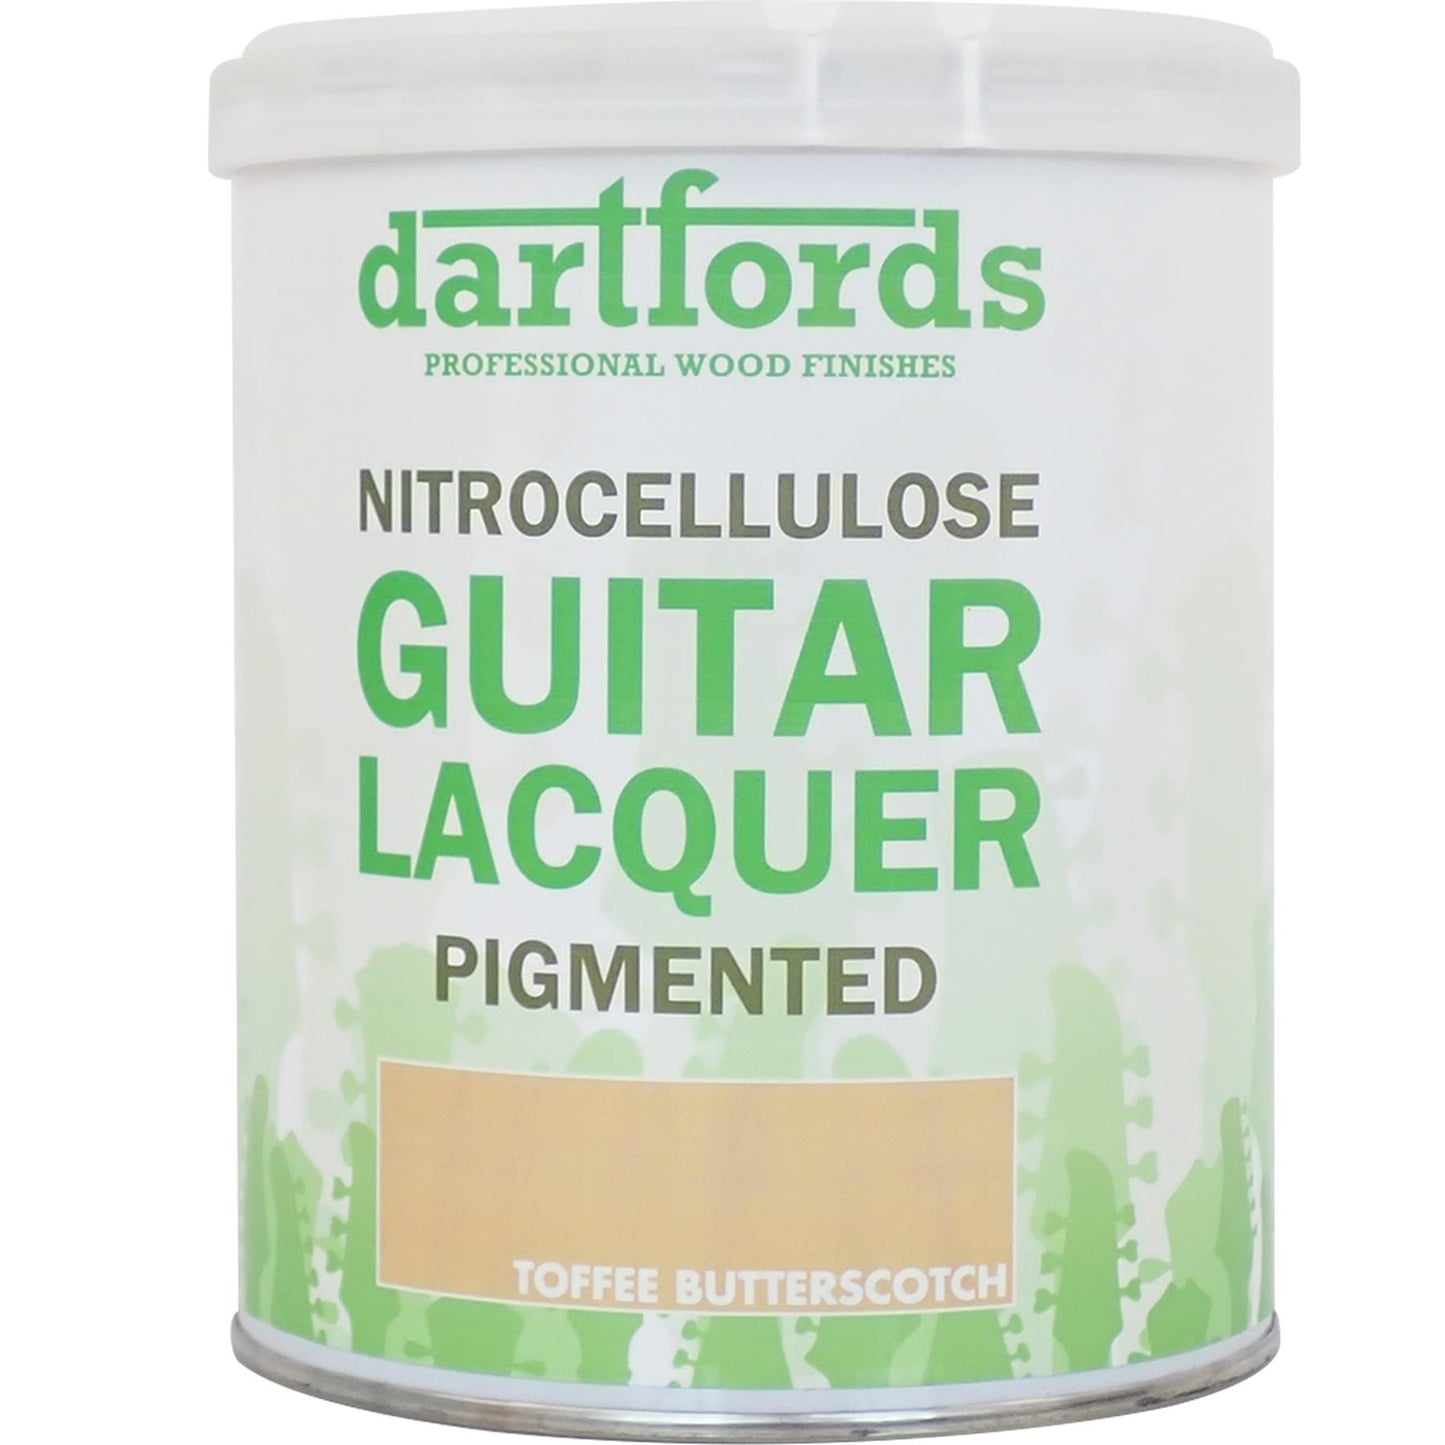 dartfords Toffee Butterscotch Pigmented Nitrocellulose Guitar Lacquer - 1 litre Tin